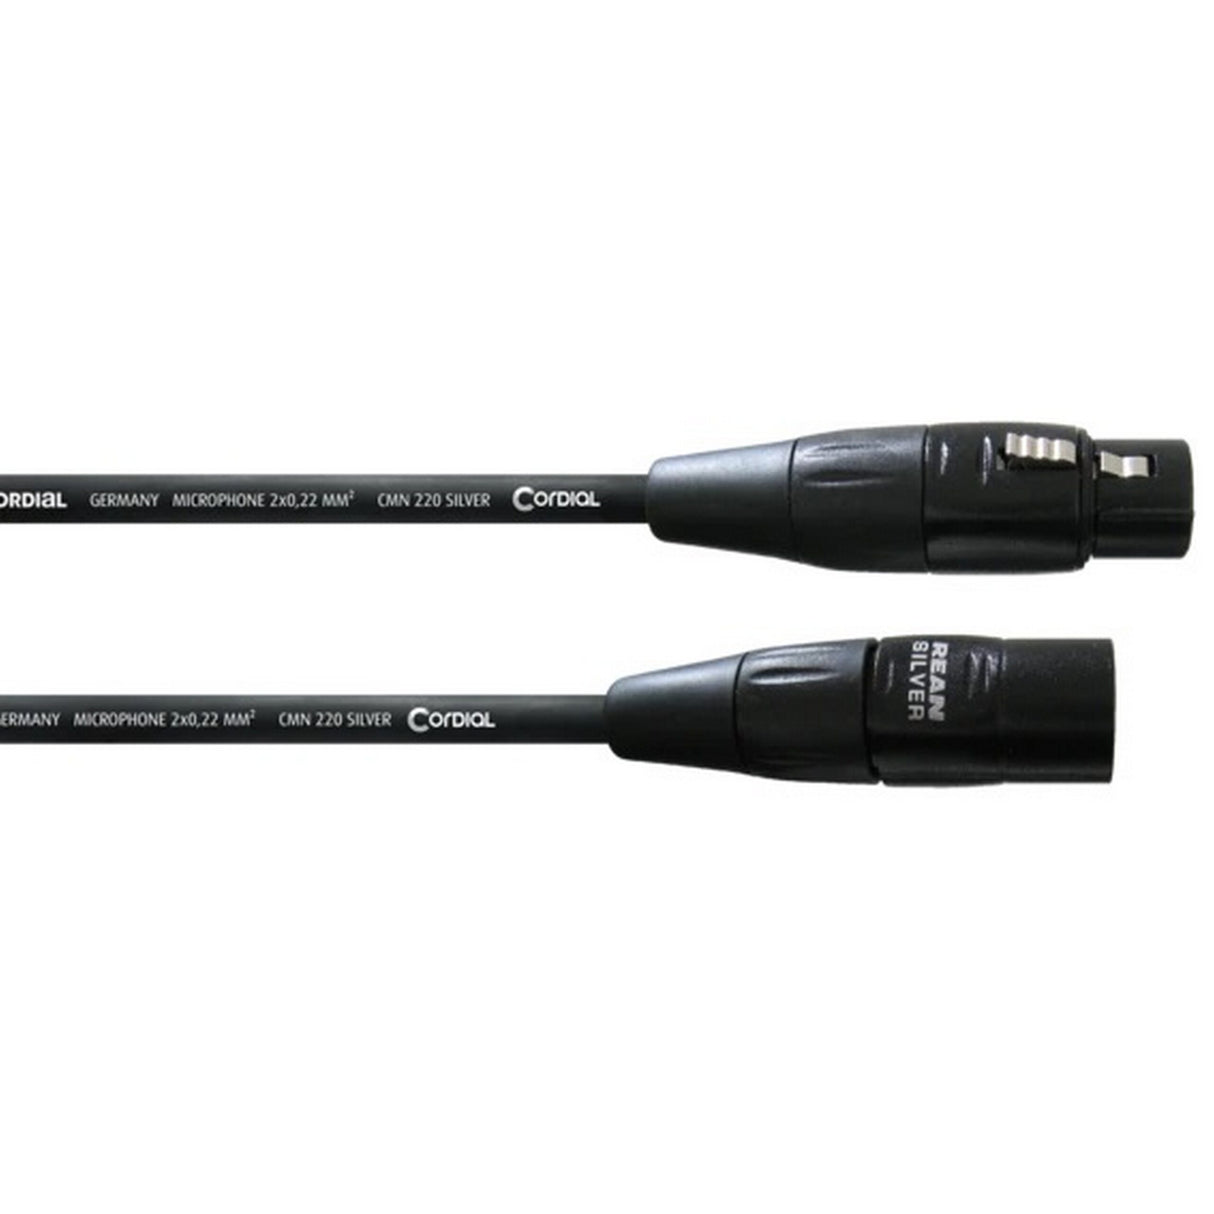 Cordial CIM 1.5 FM XLR Male to XLR Female Microphone Cable, 5-Feet